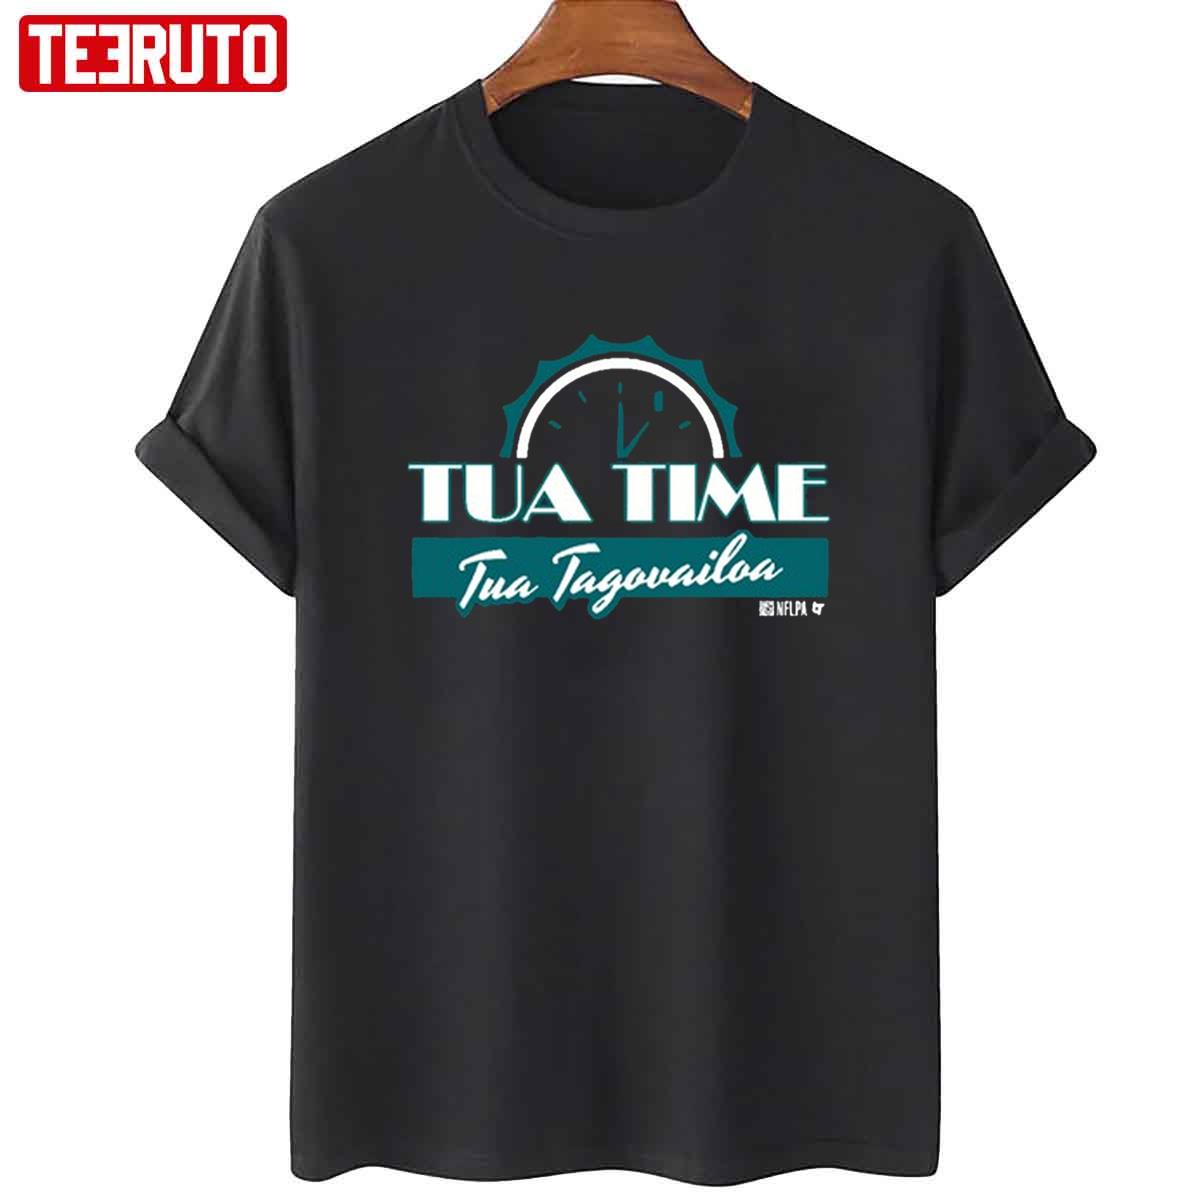 Miami Dolphins Tua Time Tagovailoa Unisex T-Shirt